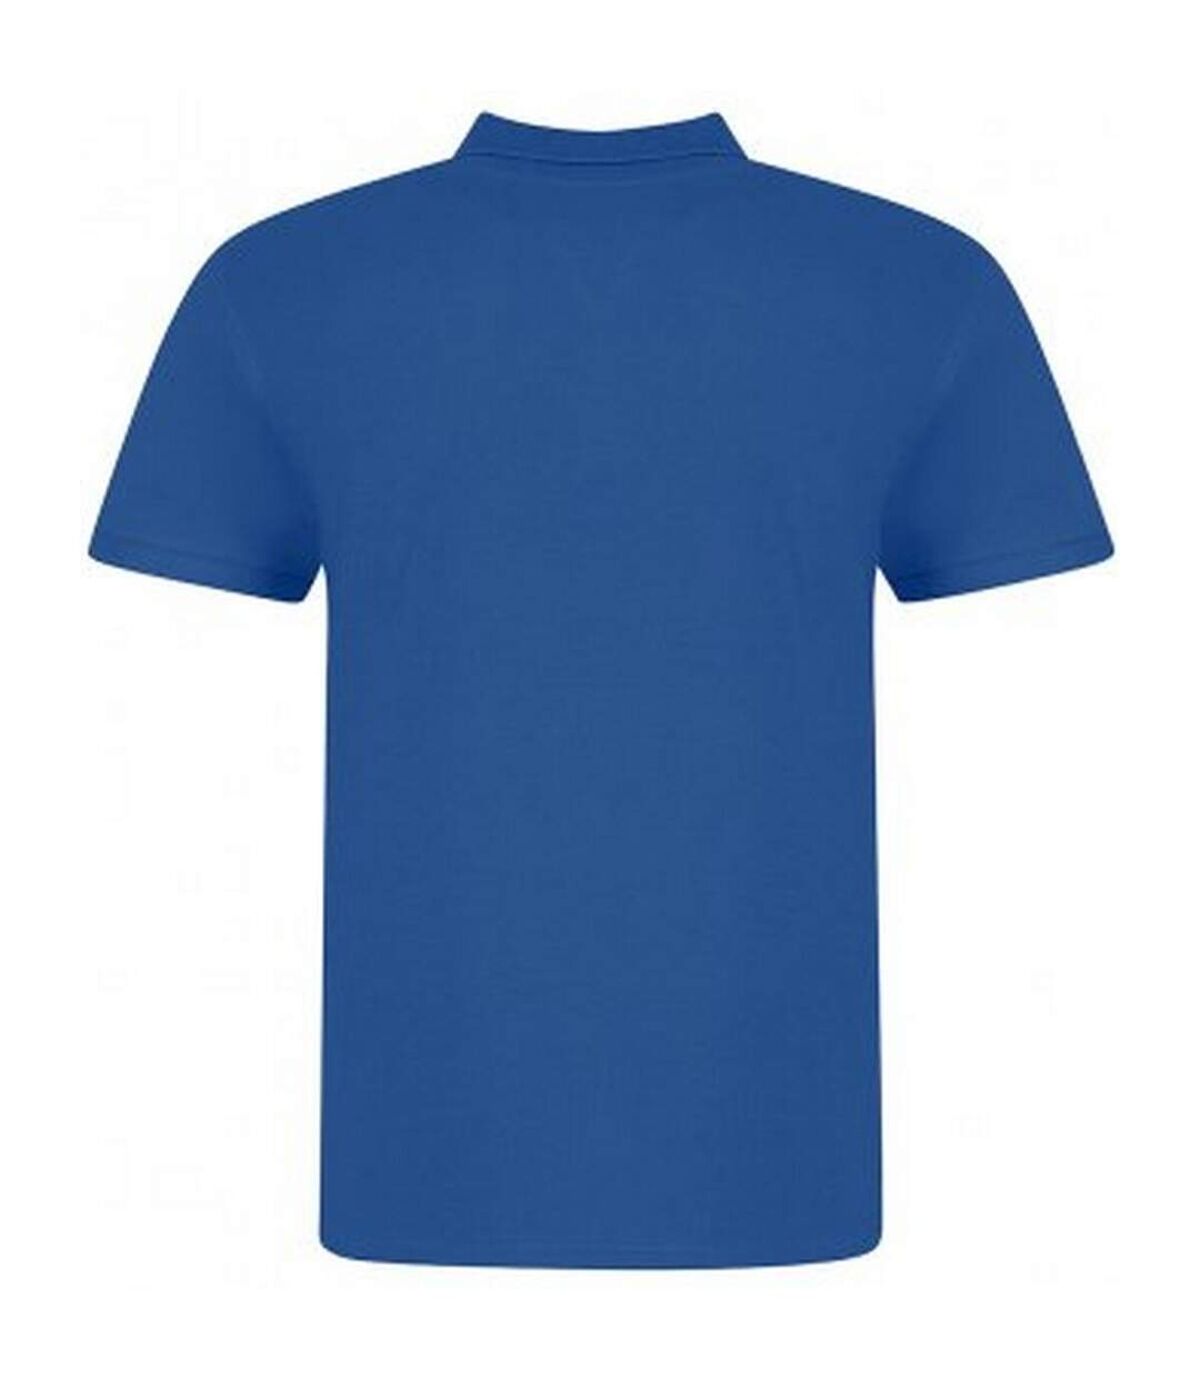 Awdis Mens Piqu Cotton Short-Sleeved Polo Shirt (Royal Blue) - UTPC4134